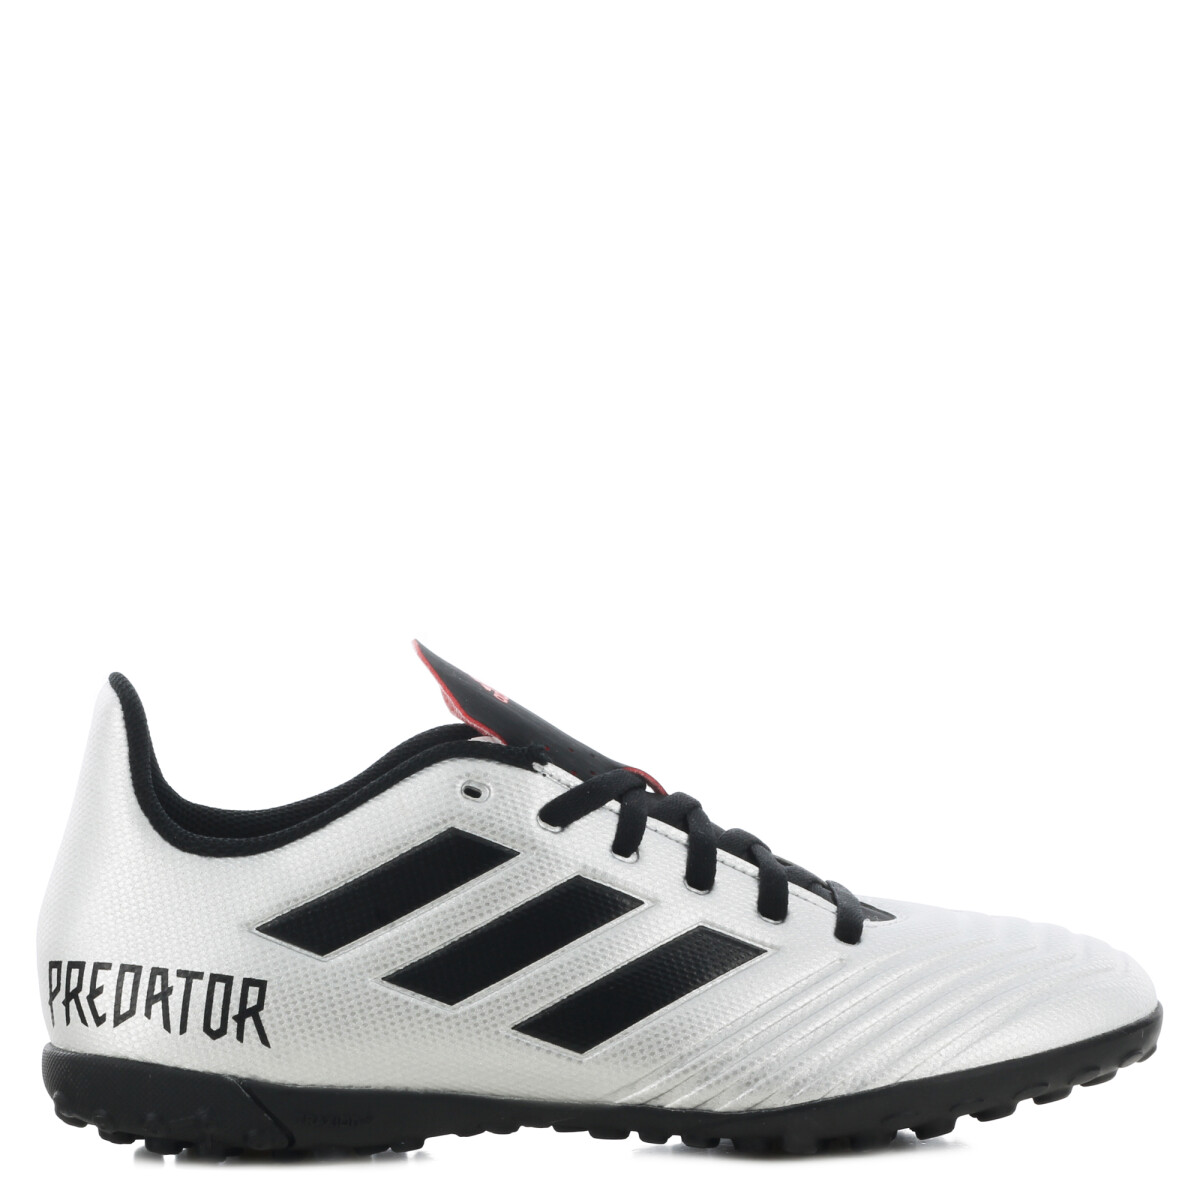 Futbol 5 Predator 19.4 Adidas - Plata/Negro 